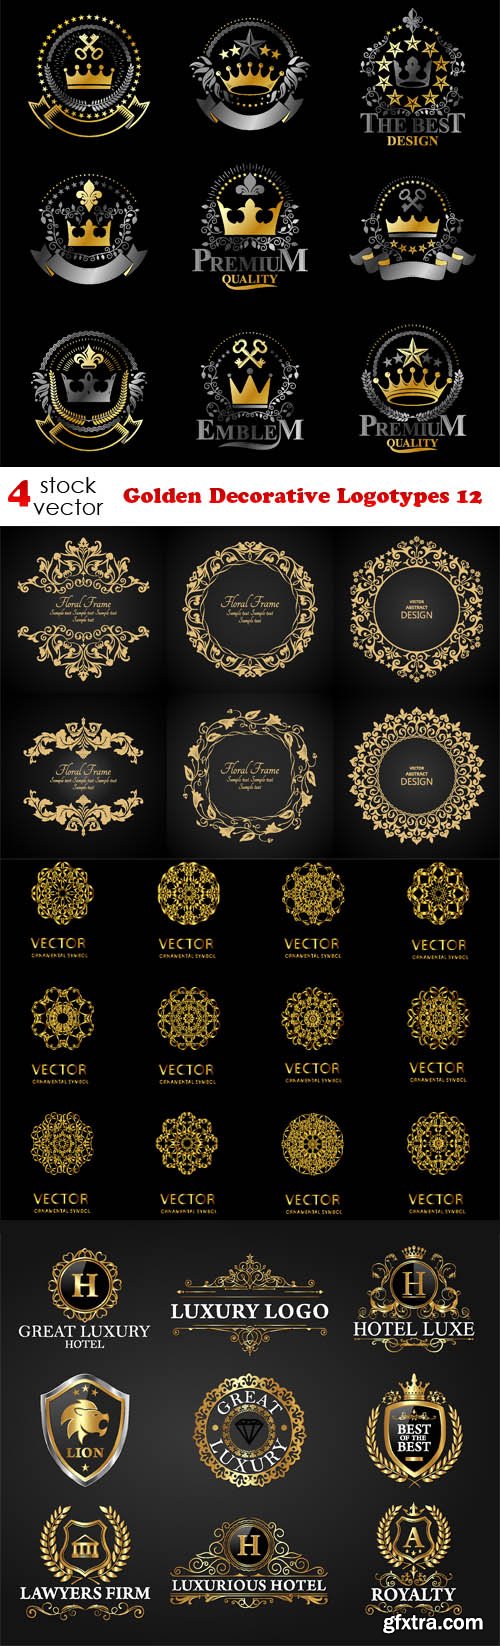 Vectors - Golden Decorative Logotypes 12